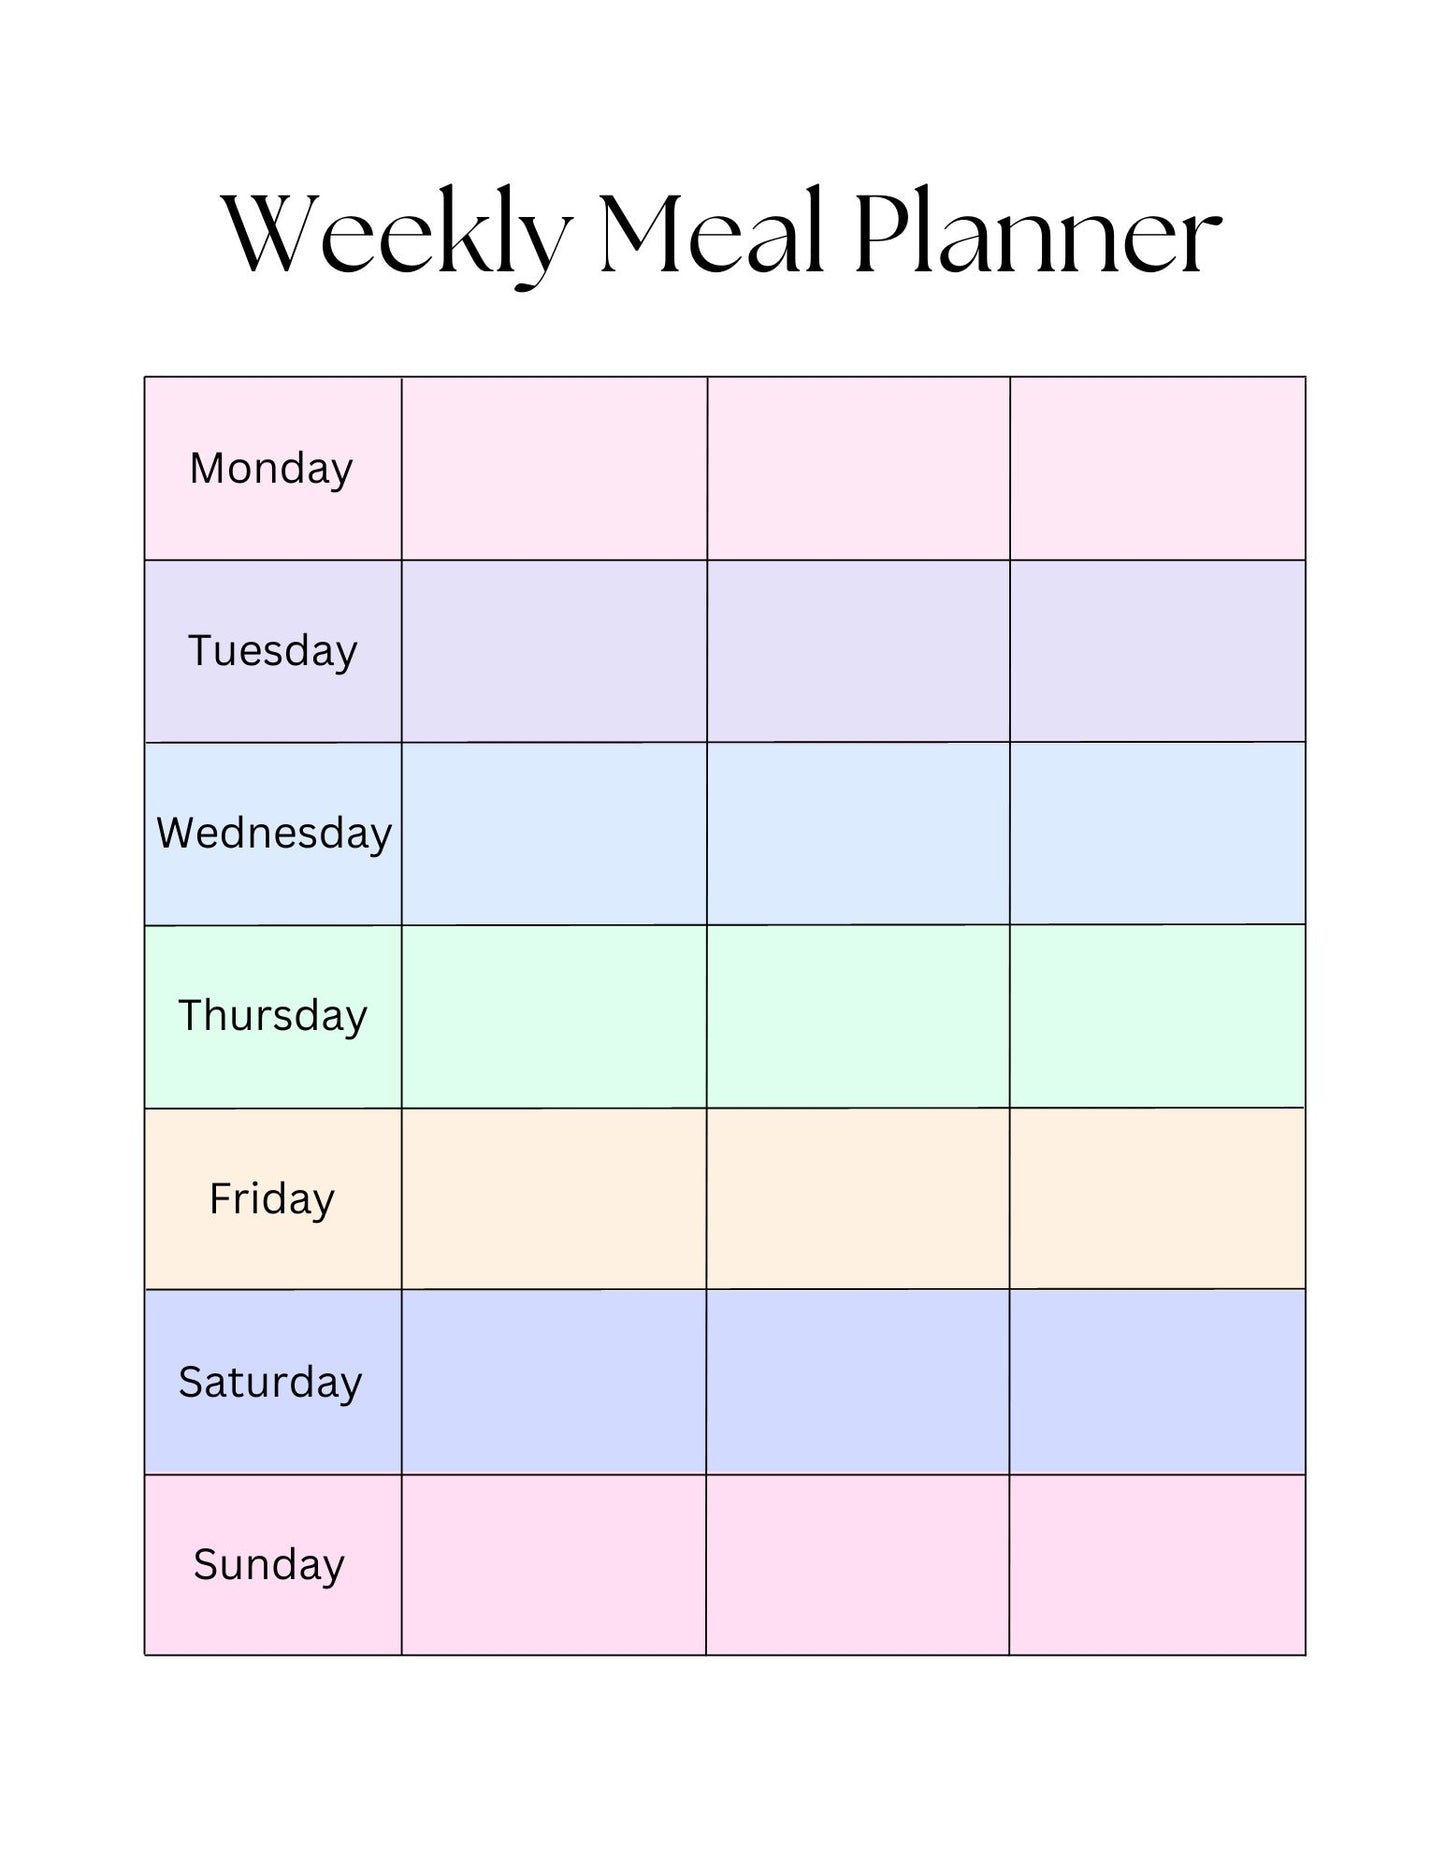 Meal Planning Simplified eBook